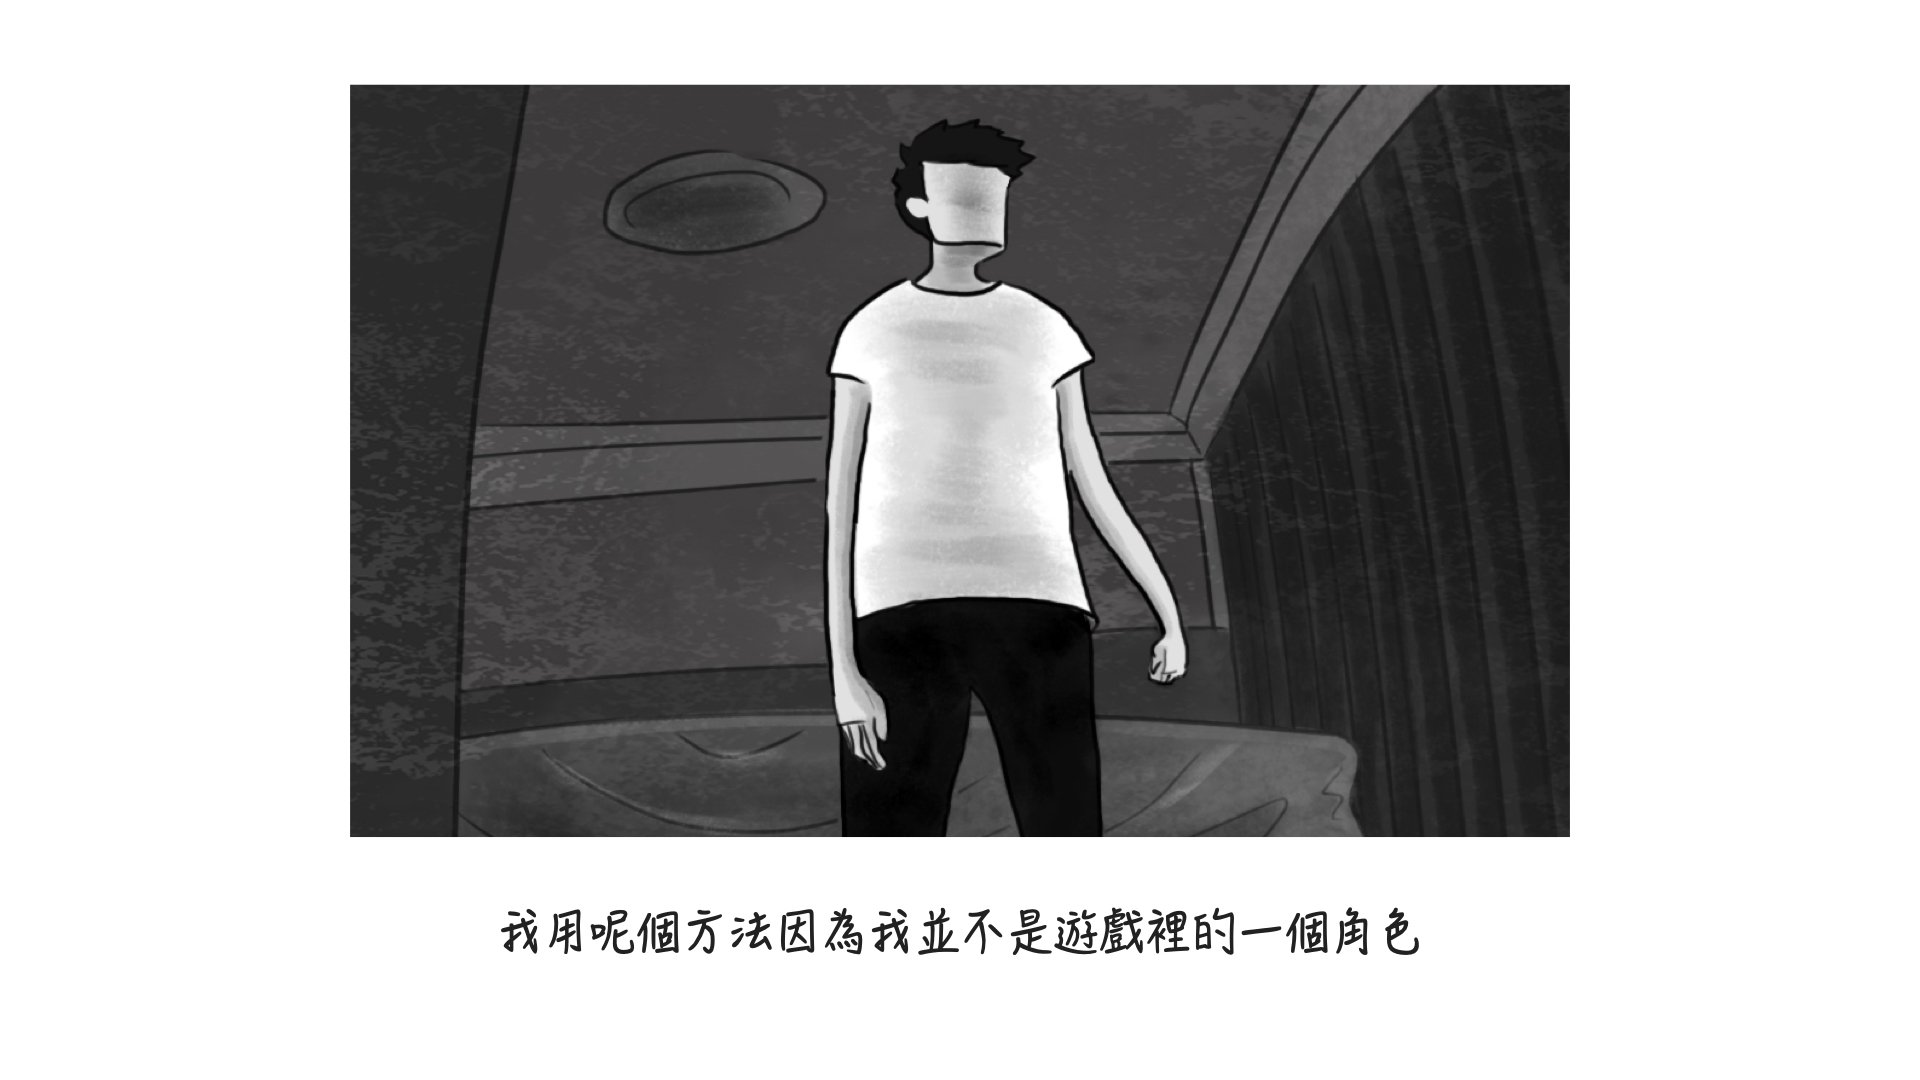 PP_Comic_Chinese_HK.057.jpeg